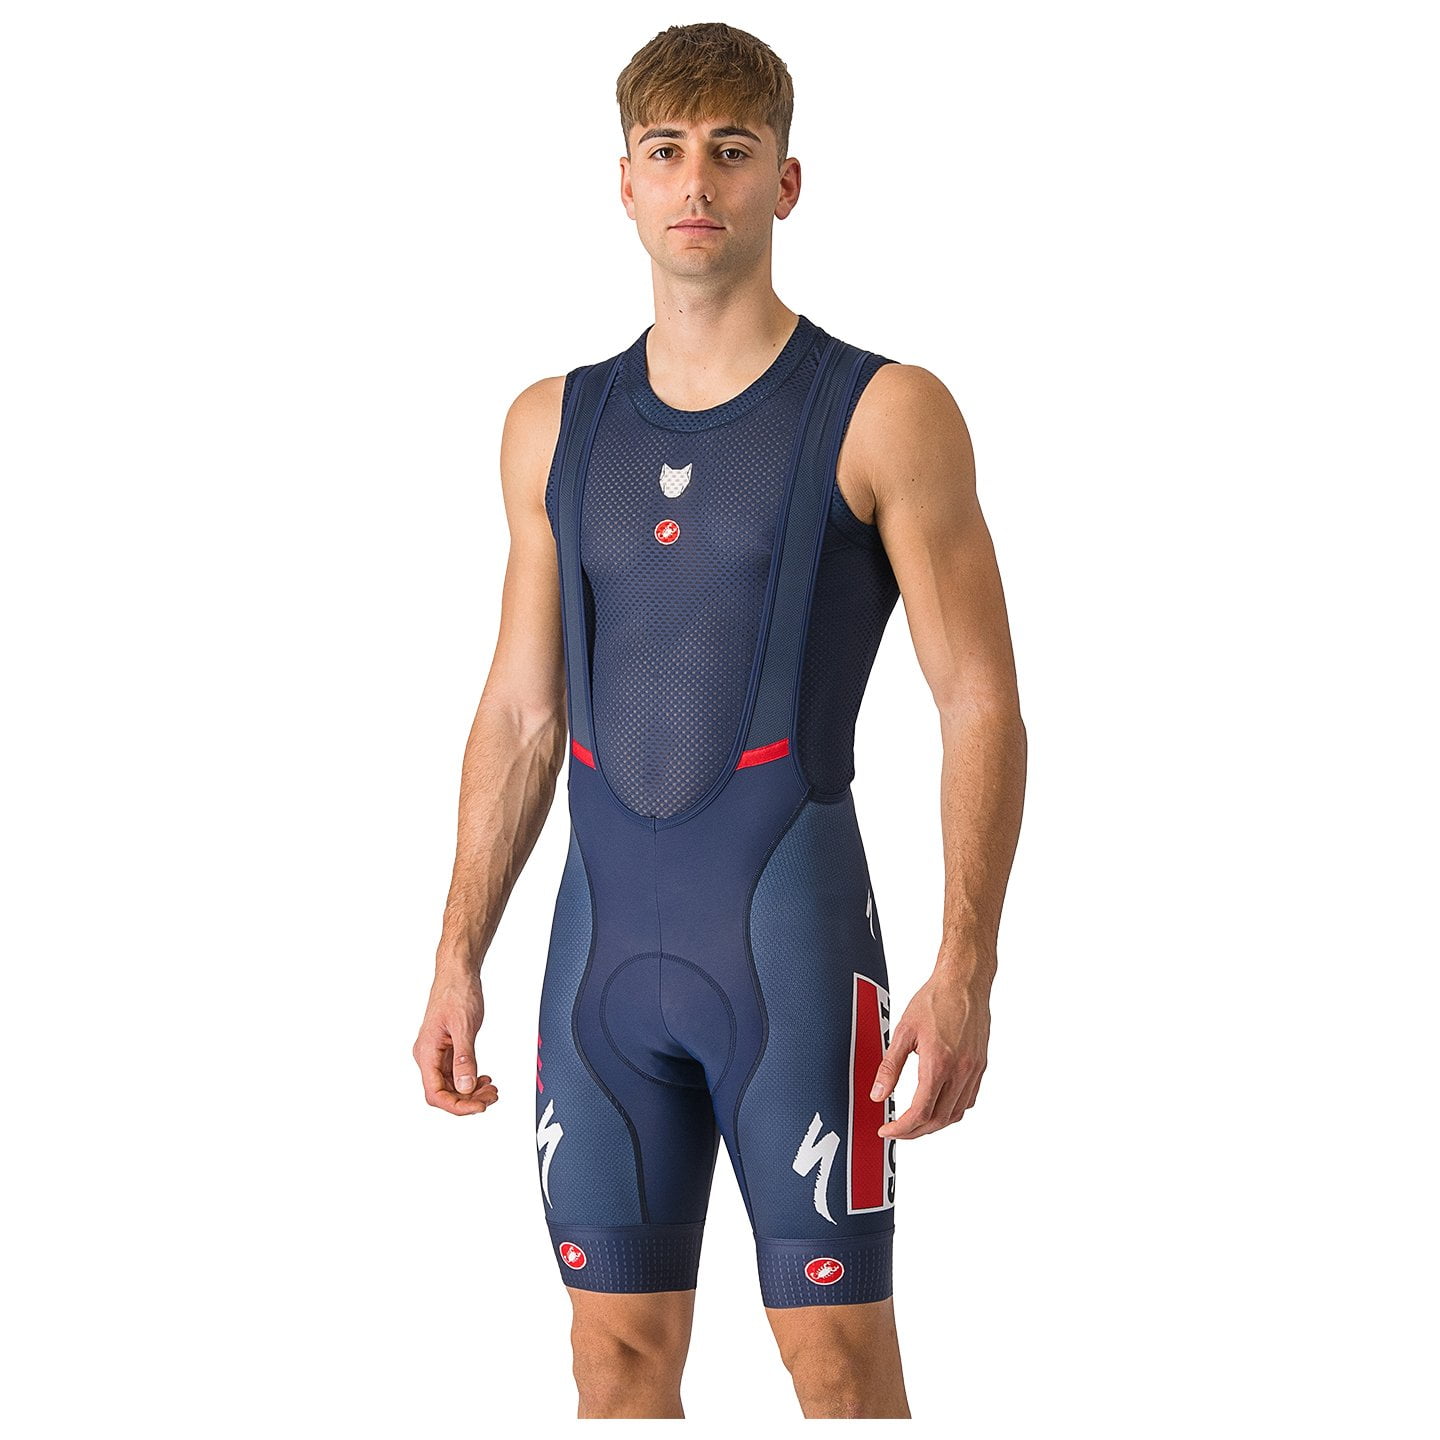 SOUDAL QUICK-STEP 2024 Bib Shorts, for men, size S, Cycle shorts, Cycling clothing